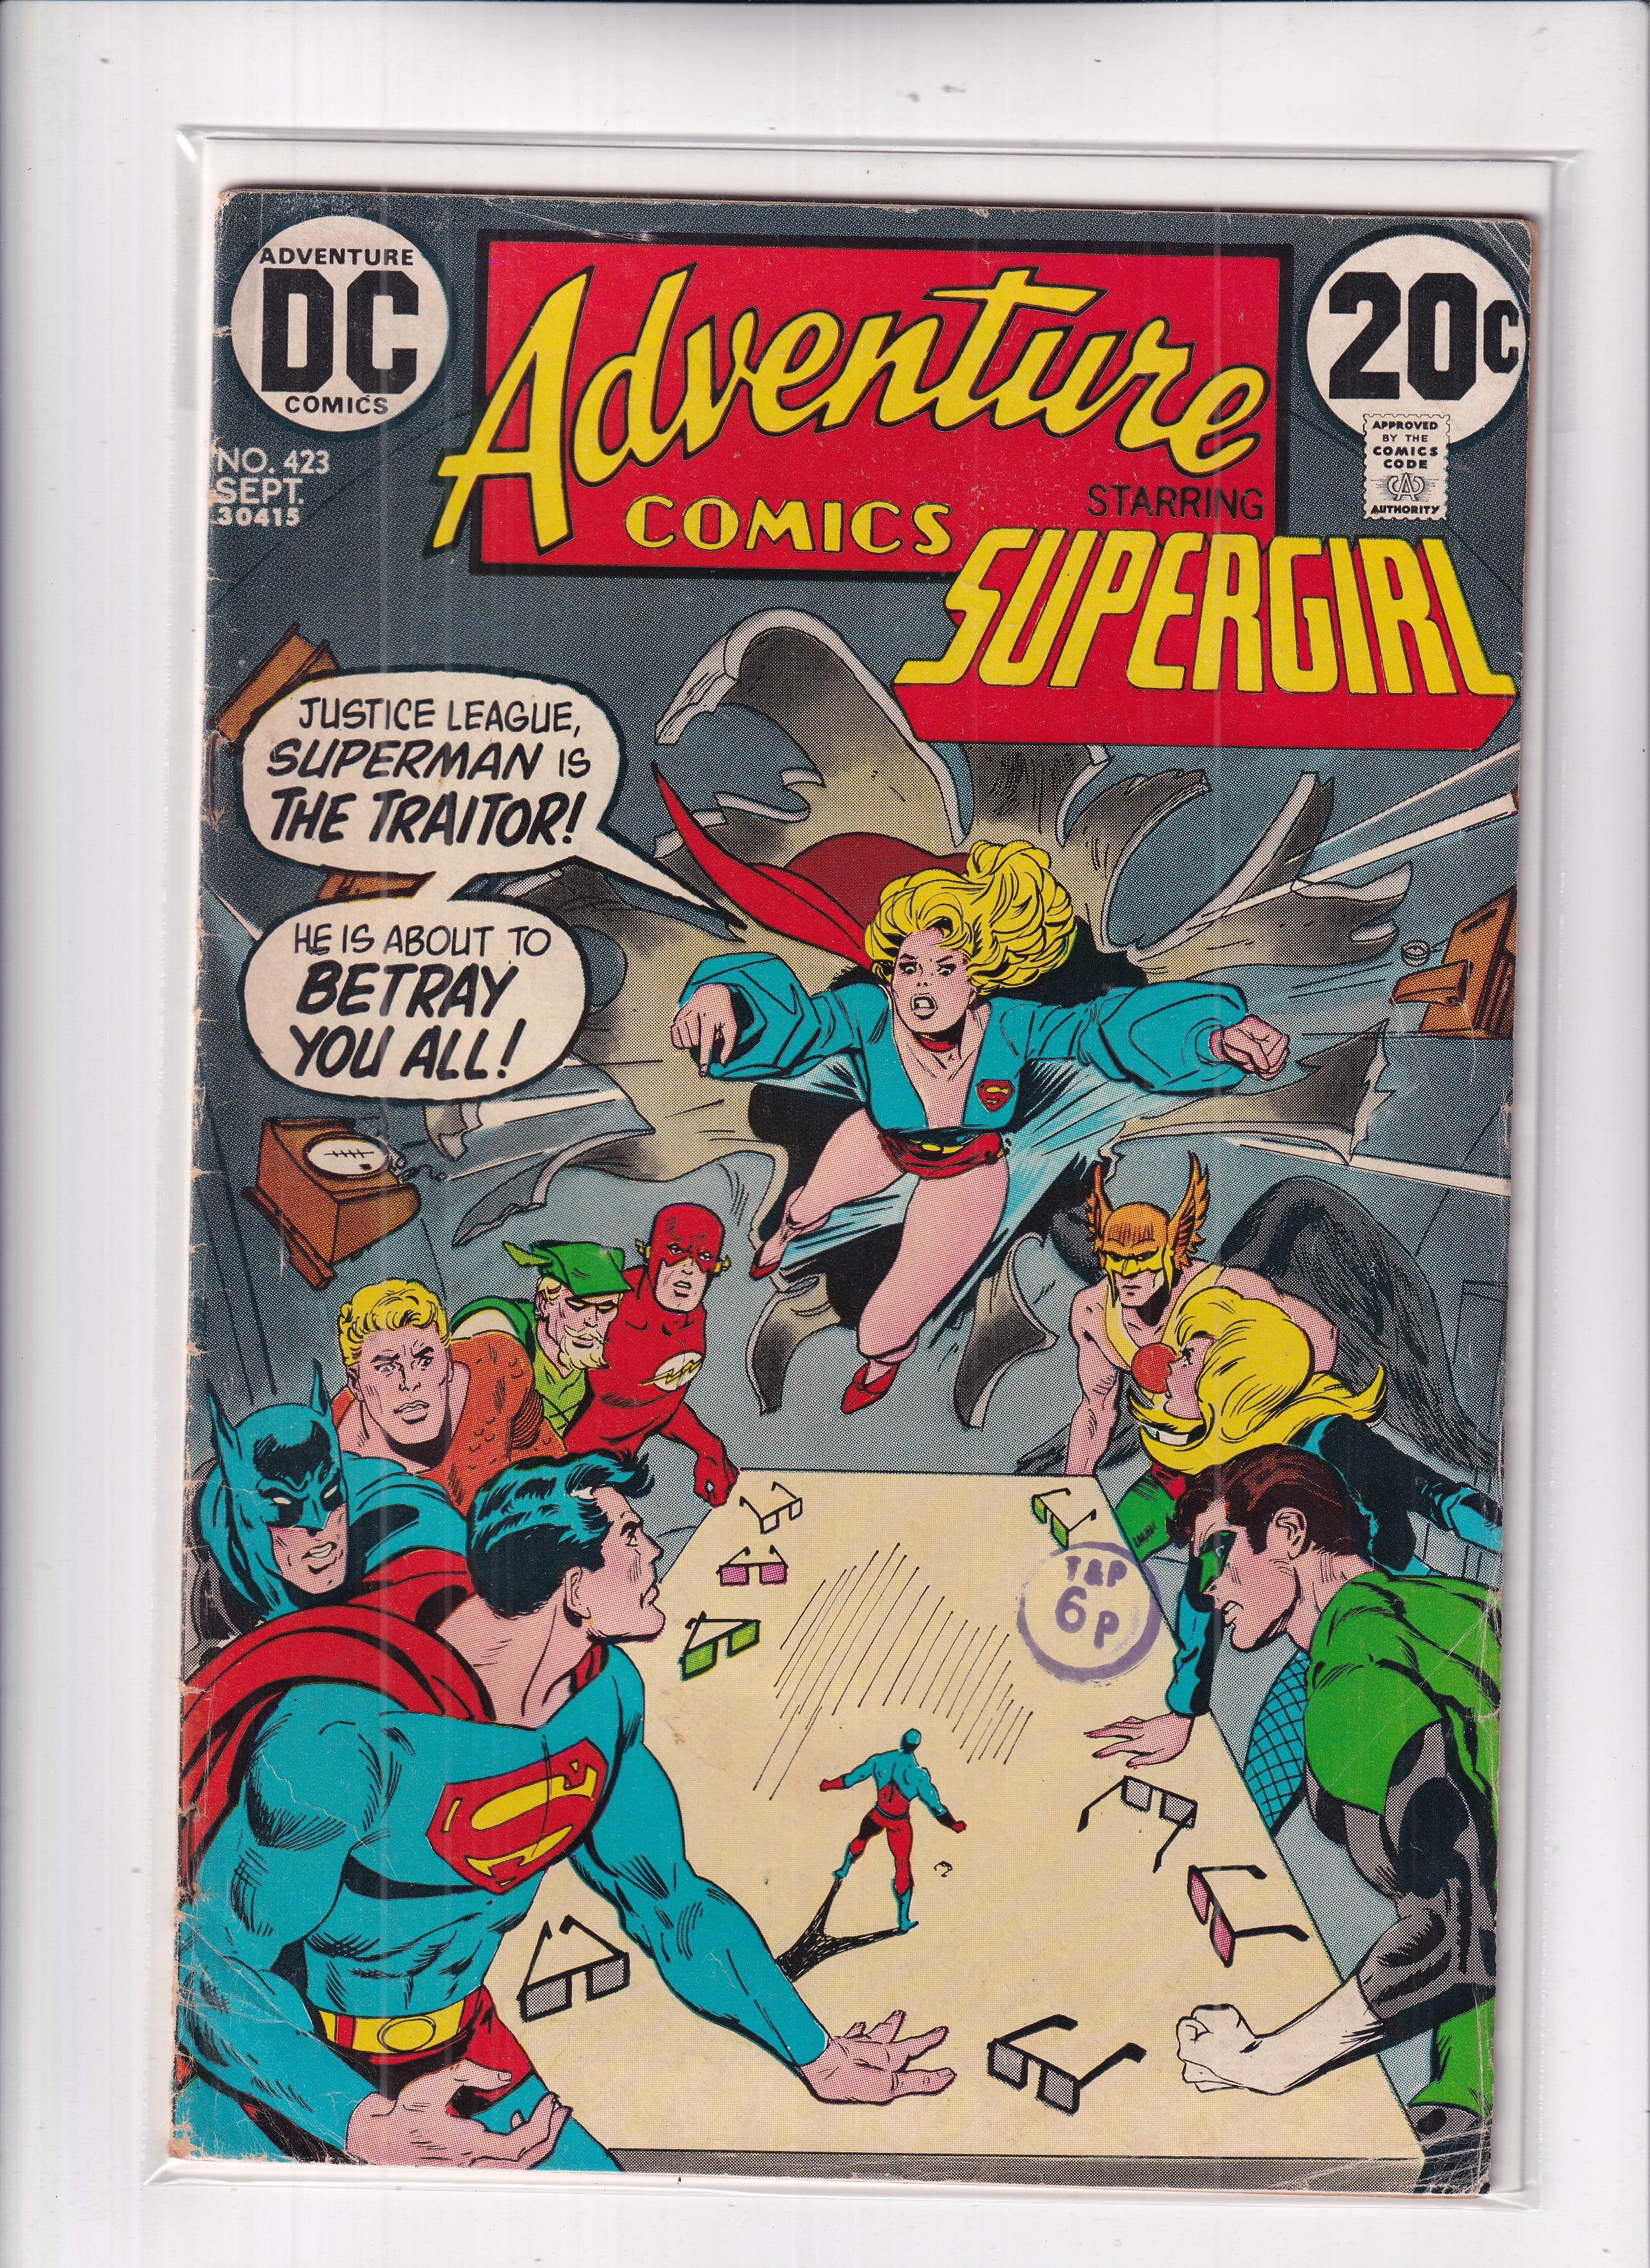 Adventure Comics #423